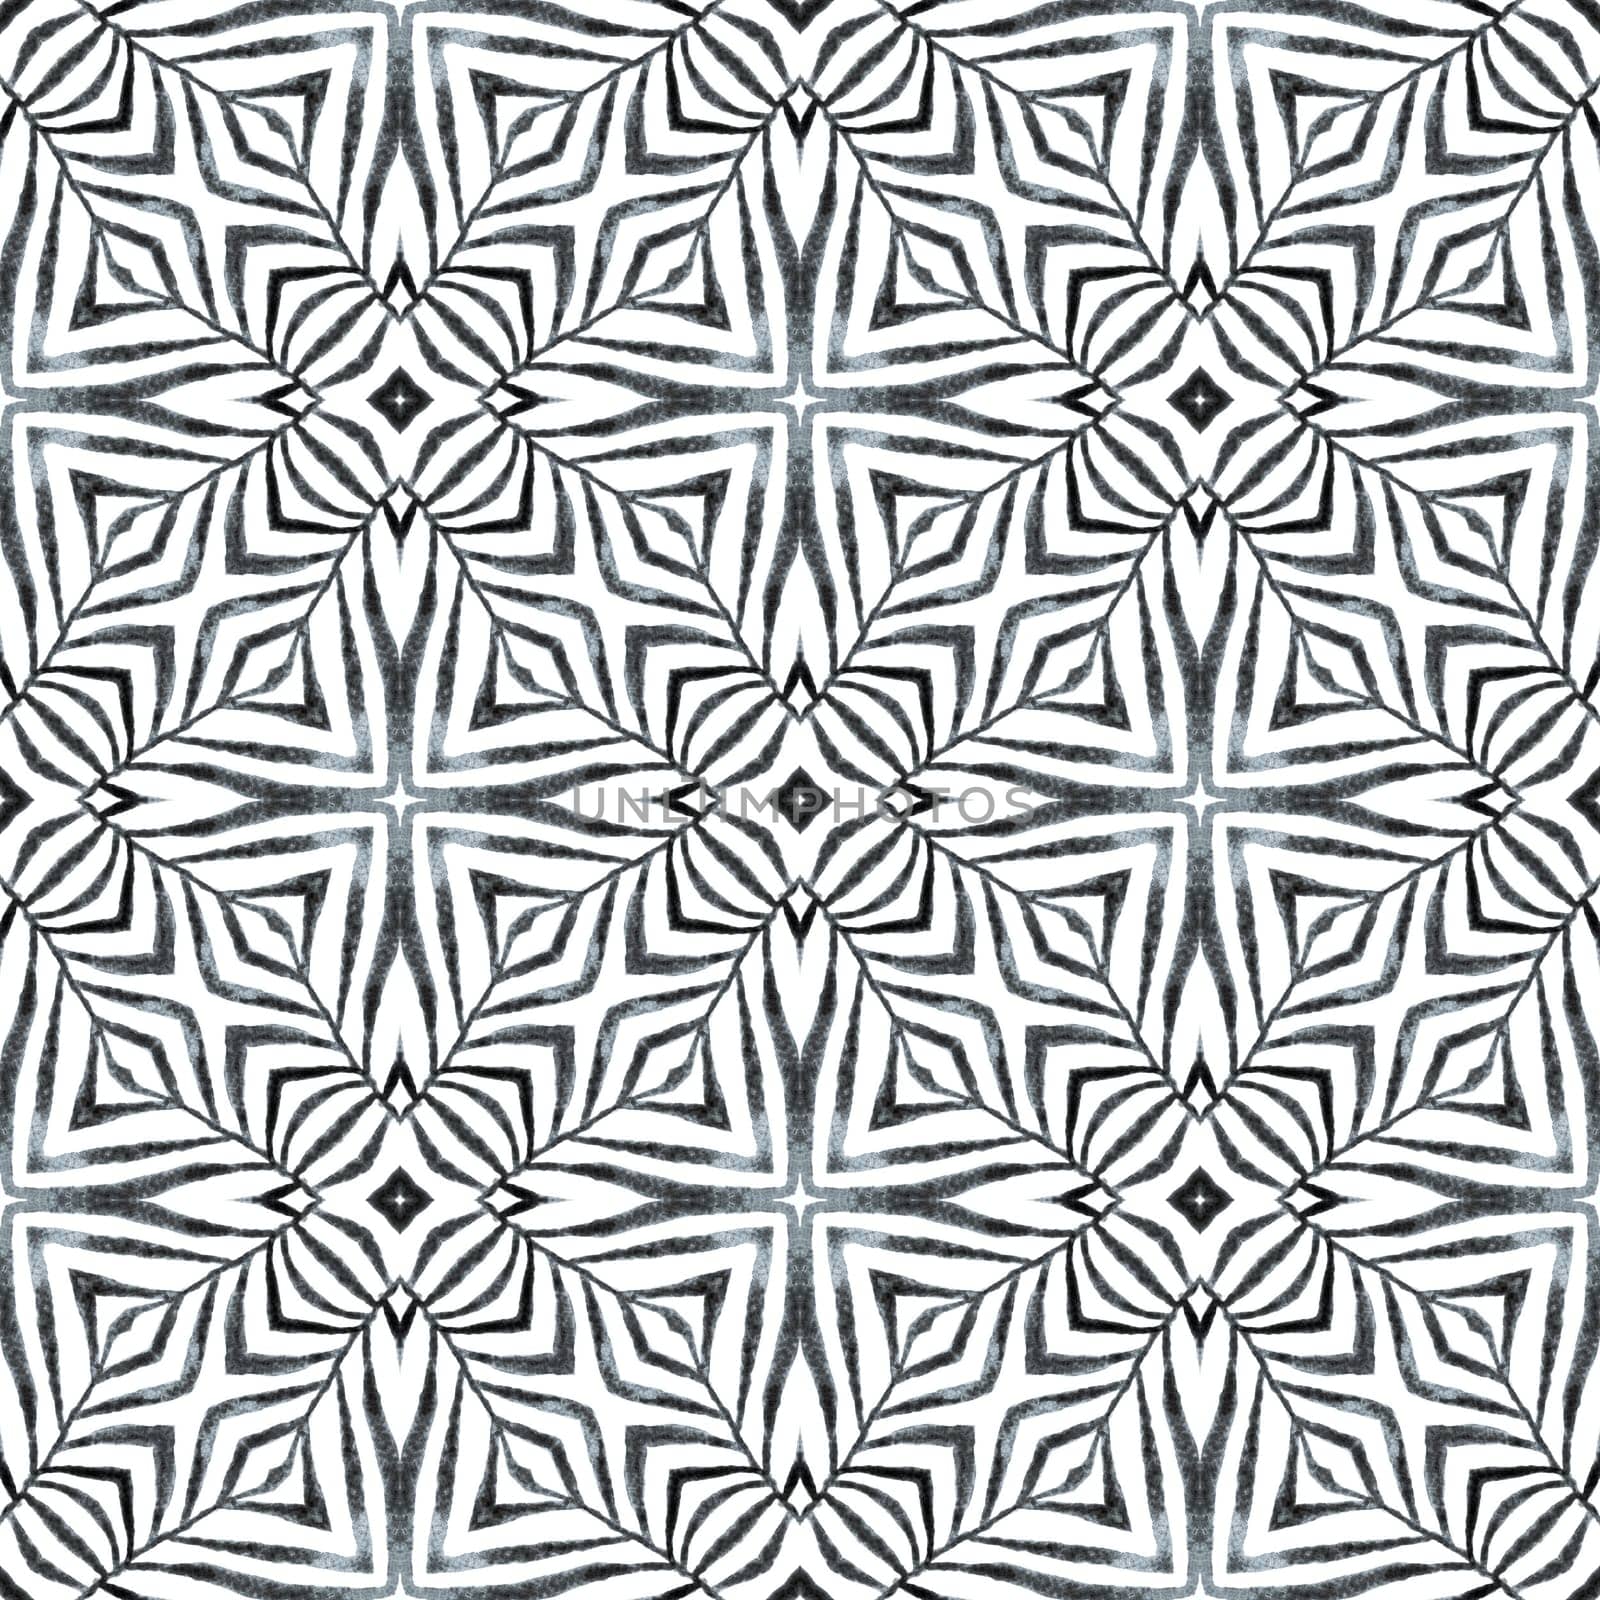 Textile ready flawless print, swimwear fabric, wallpaper, wrapping. Black and white modern boho chic summer design. Mosaic seamless pattern. Hand drawn green mosaic seamless border.